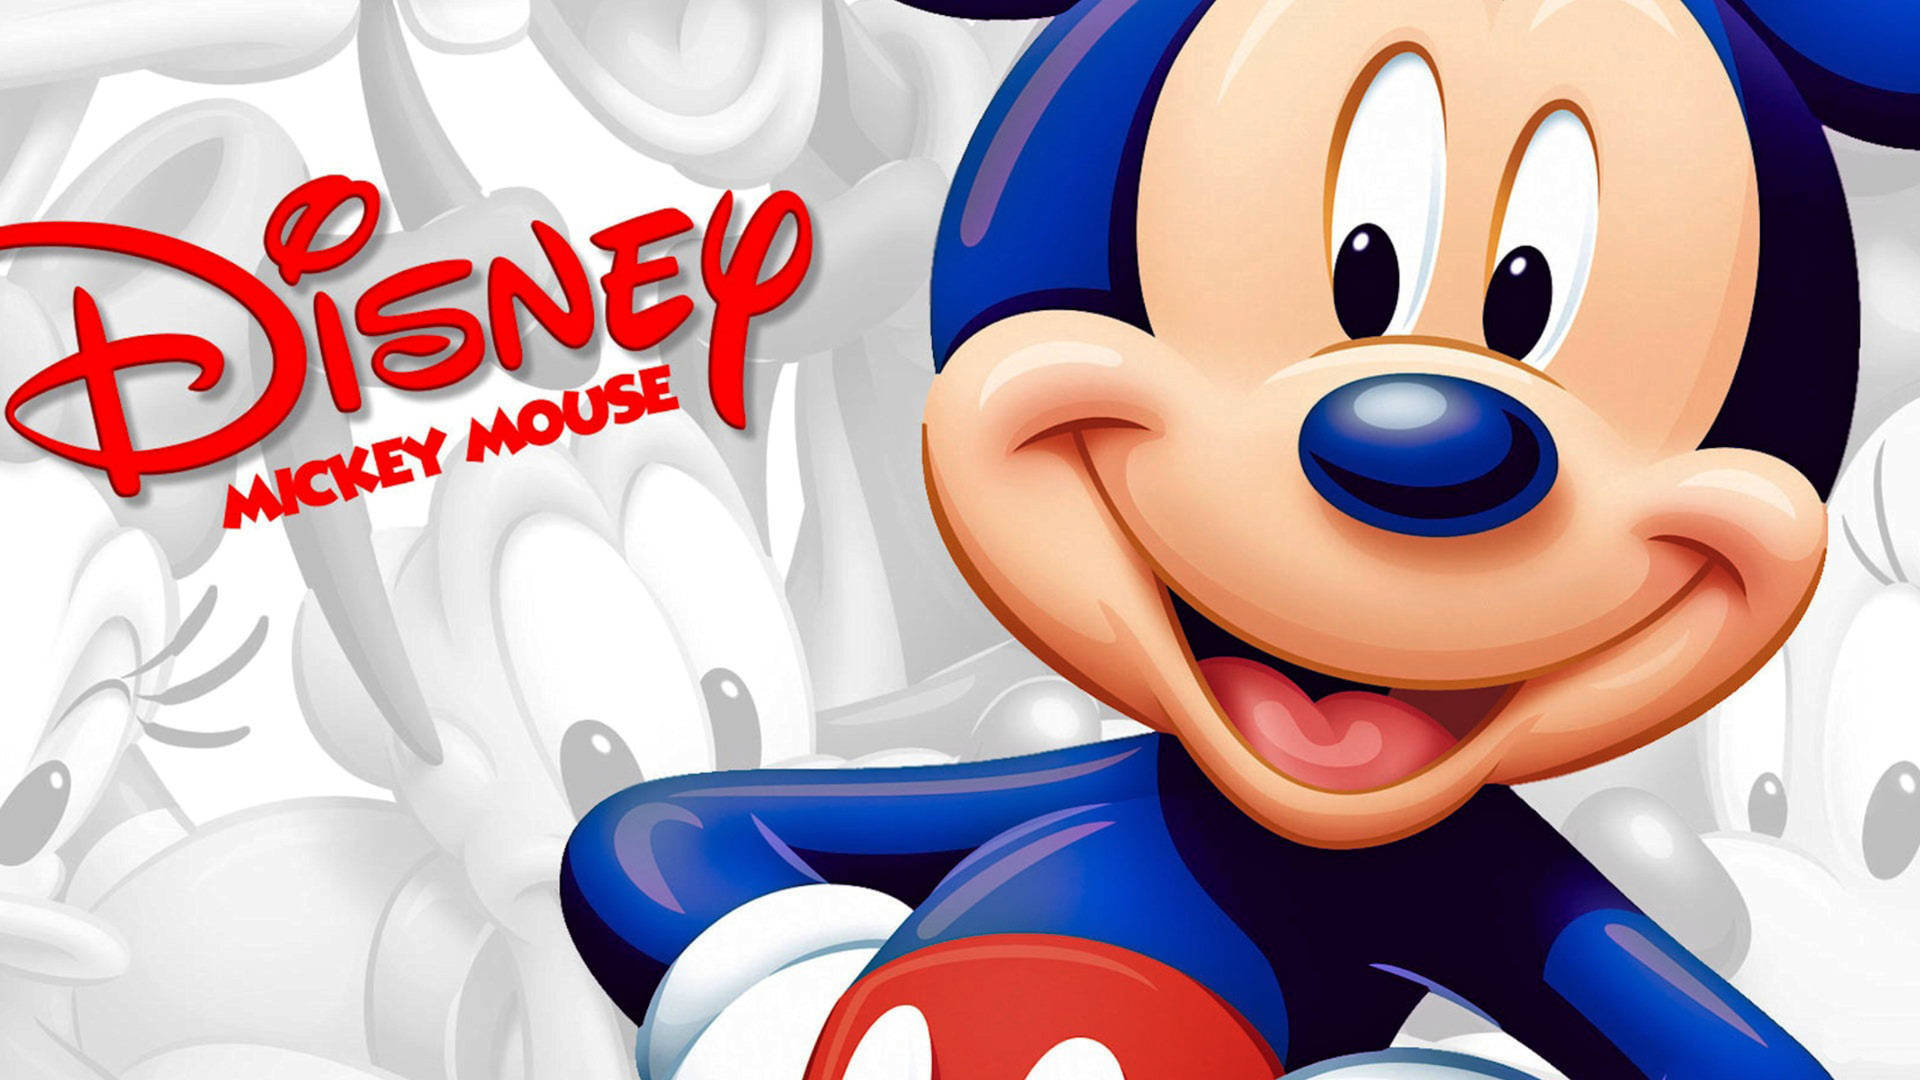 2560x1440 Disney Mickey Mouse Mascot Wallpaper